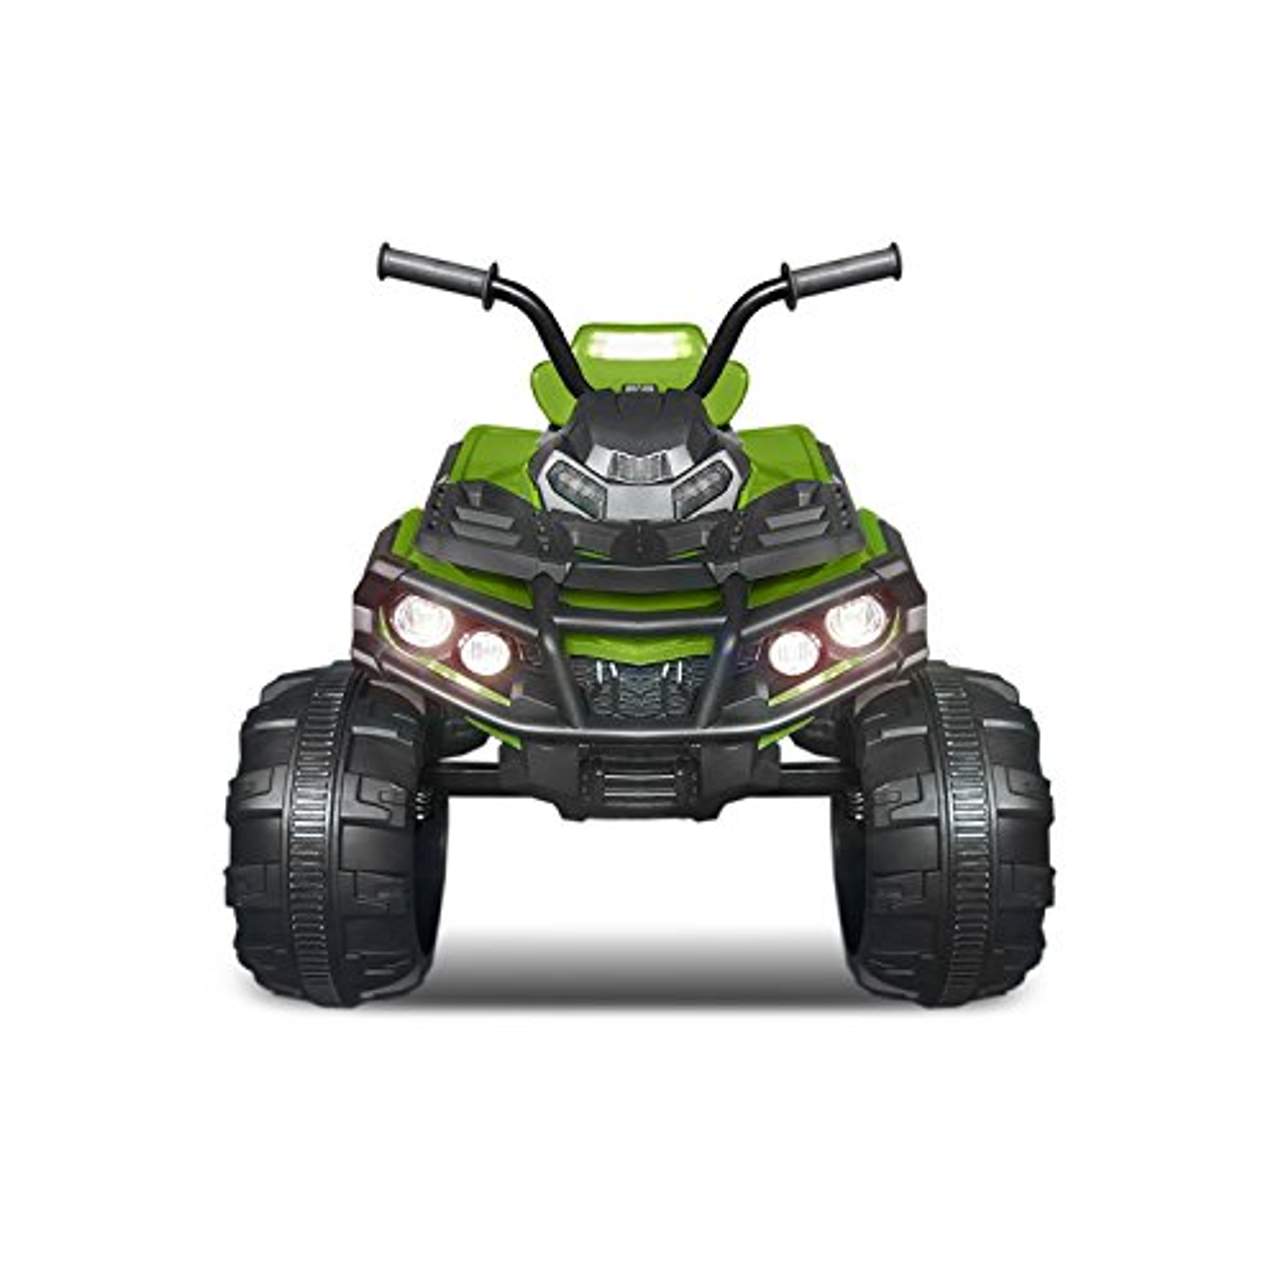 Kinder Elektro Offroad ATV 2x 35W 12V Auto Quad Kinderfahrzeug